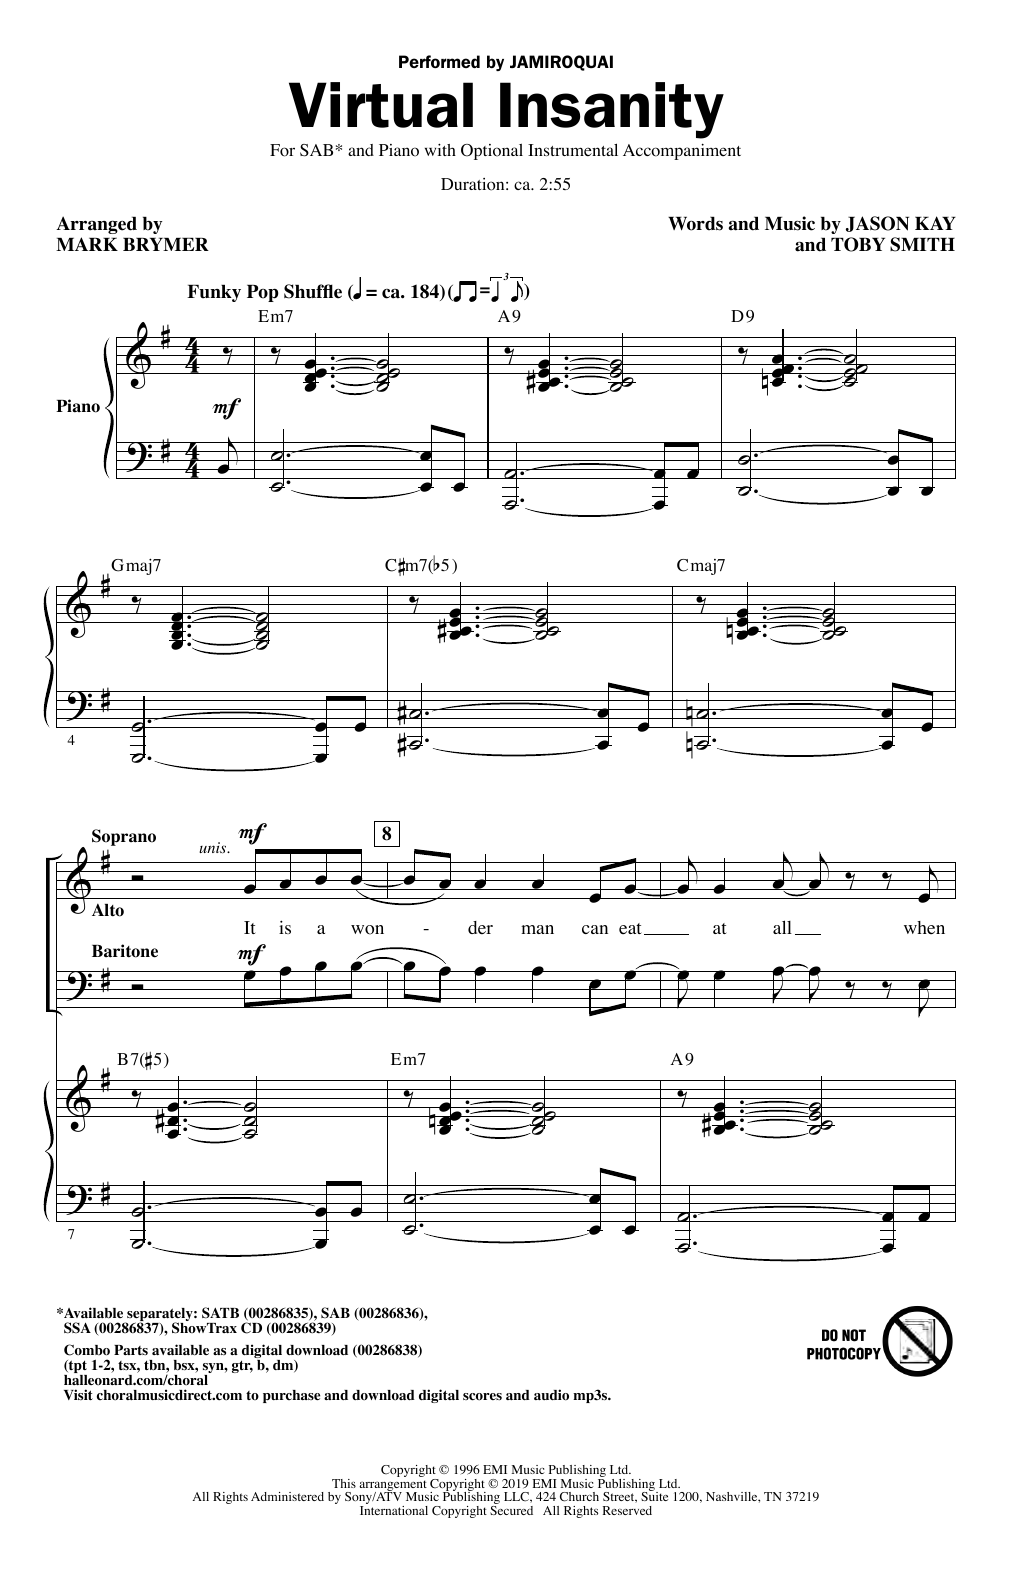 Jamiroquai Virtual Insanity (arr. Mark Brymer) Sheet Music Notes & Chords for SSA Choir - Download or Print PDF